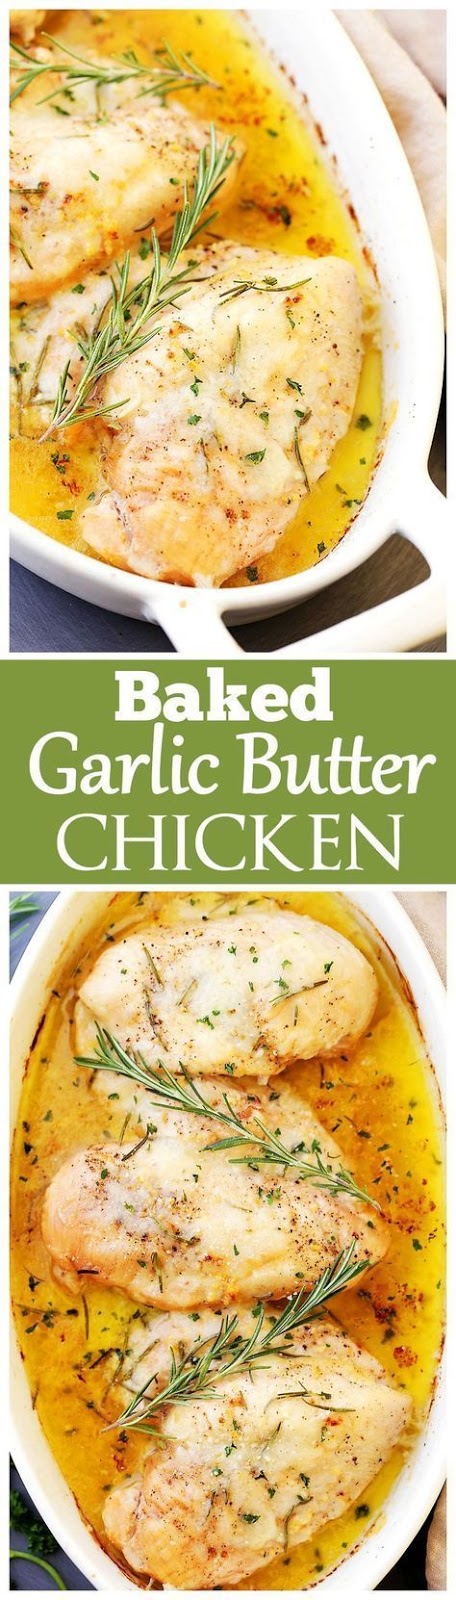 Baked Garlic Butter Chicken